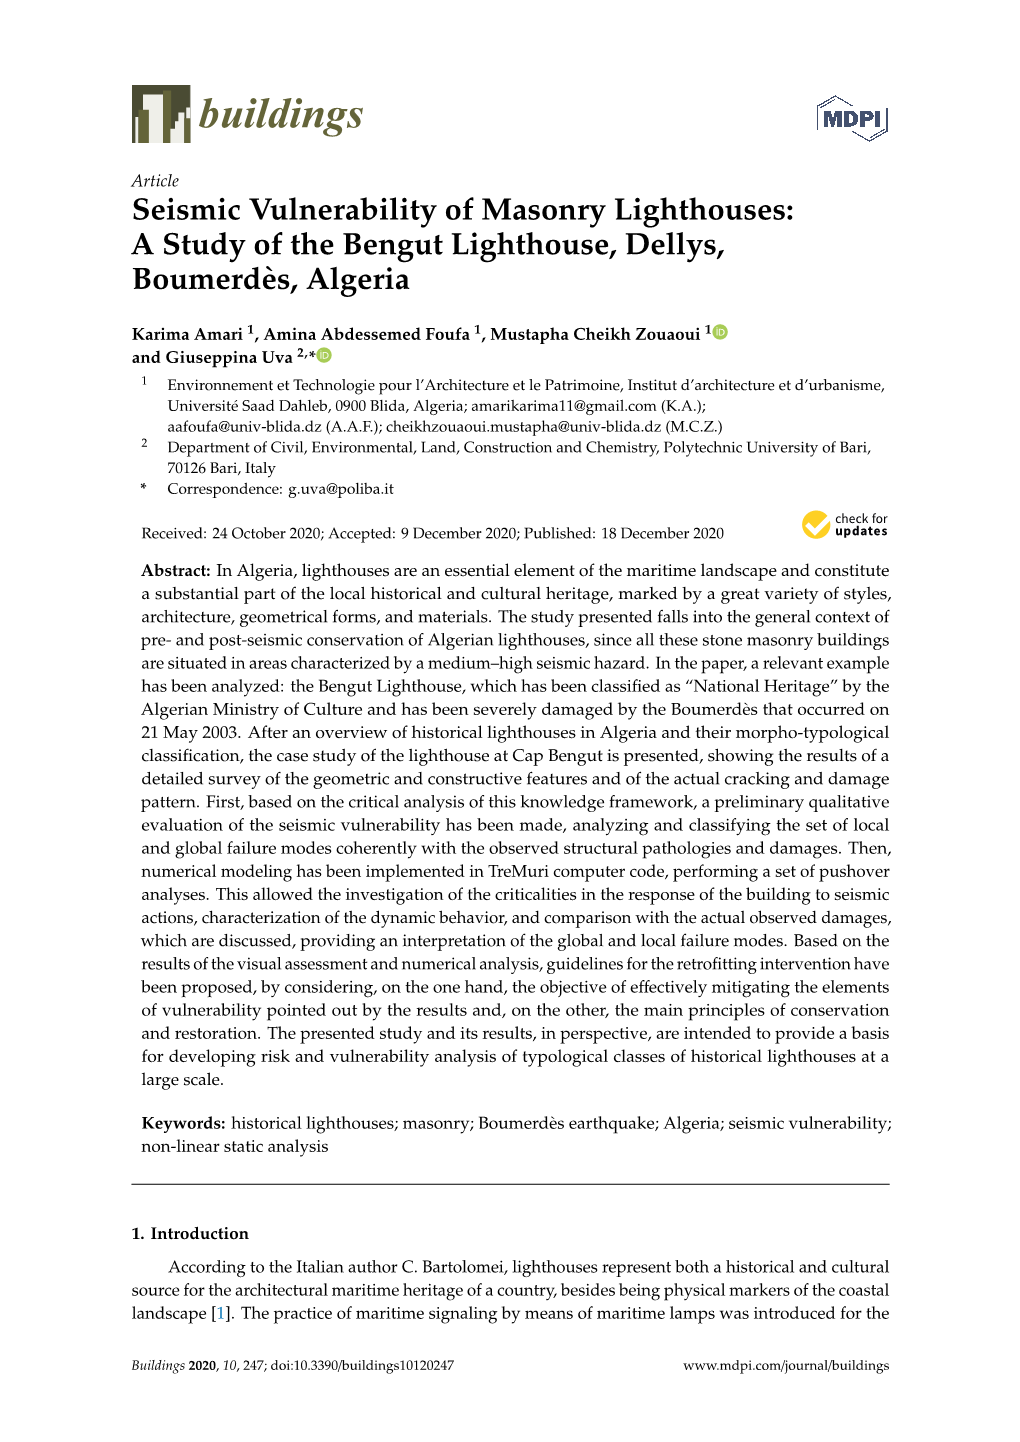 Seismic Vulnerability of Masonry Lighthouses: a Study of the Bengut Lighthouse, Dellys, Boumerdès, Algeria